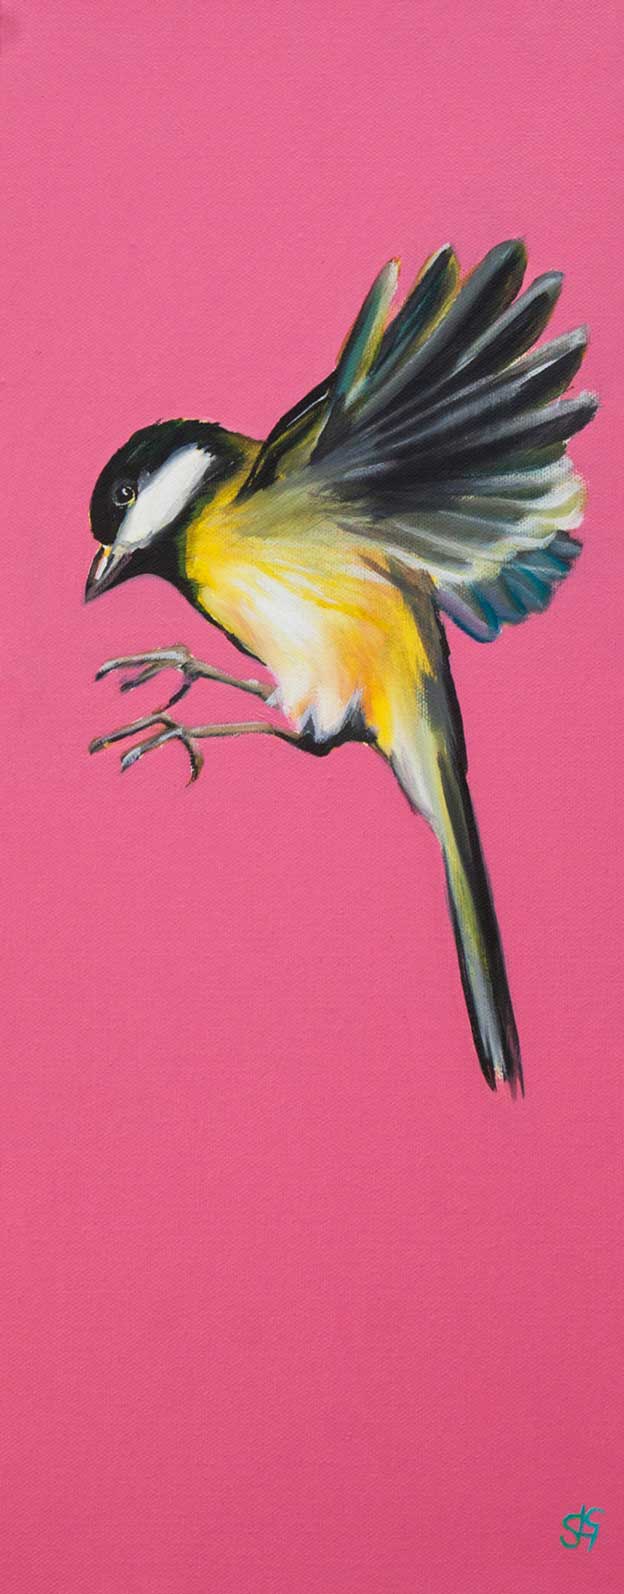 Sarah Graham's Colourful Acrylic Paintings Of Birds